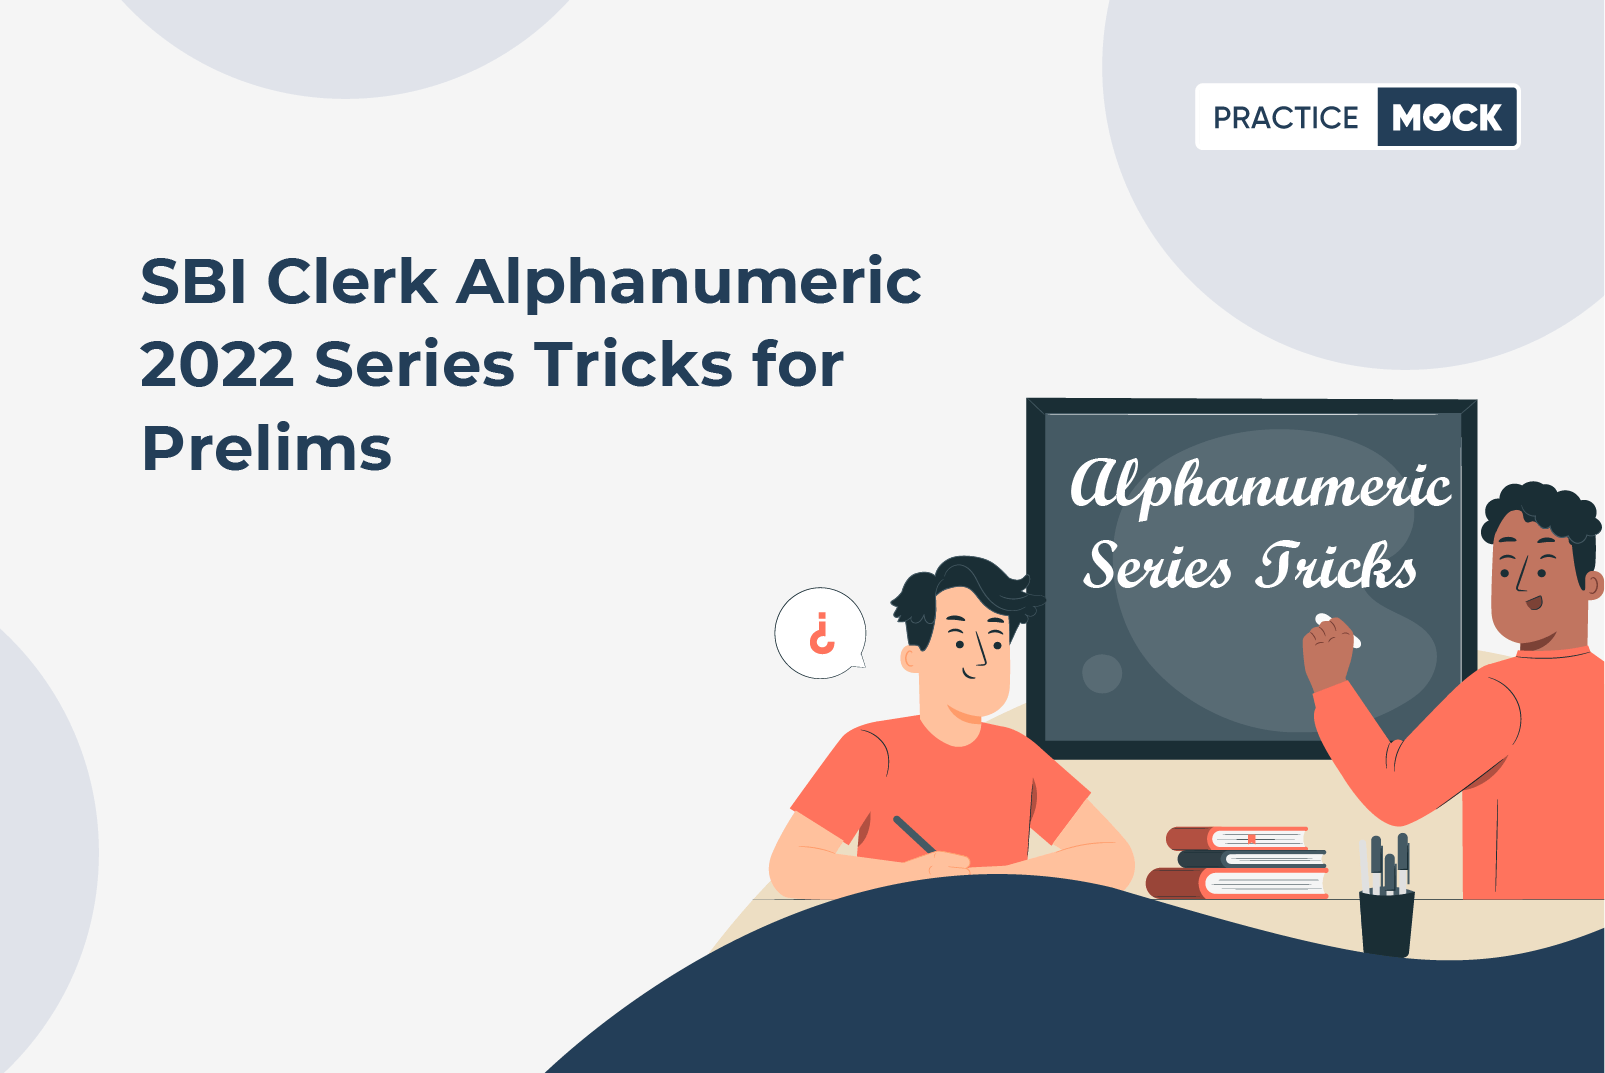 SBI Clerk Alphanumeric 2022 Series Tricks for Prelims